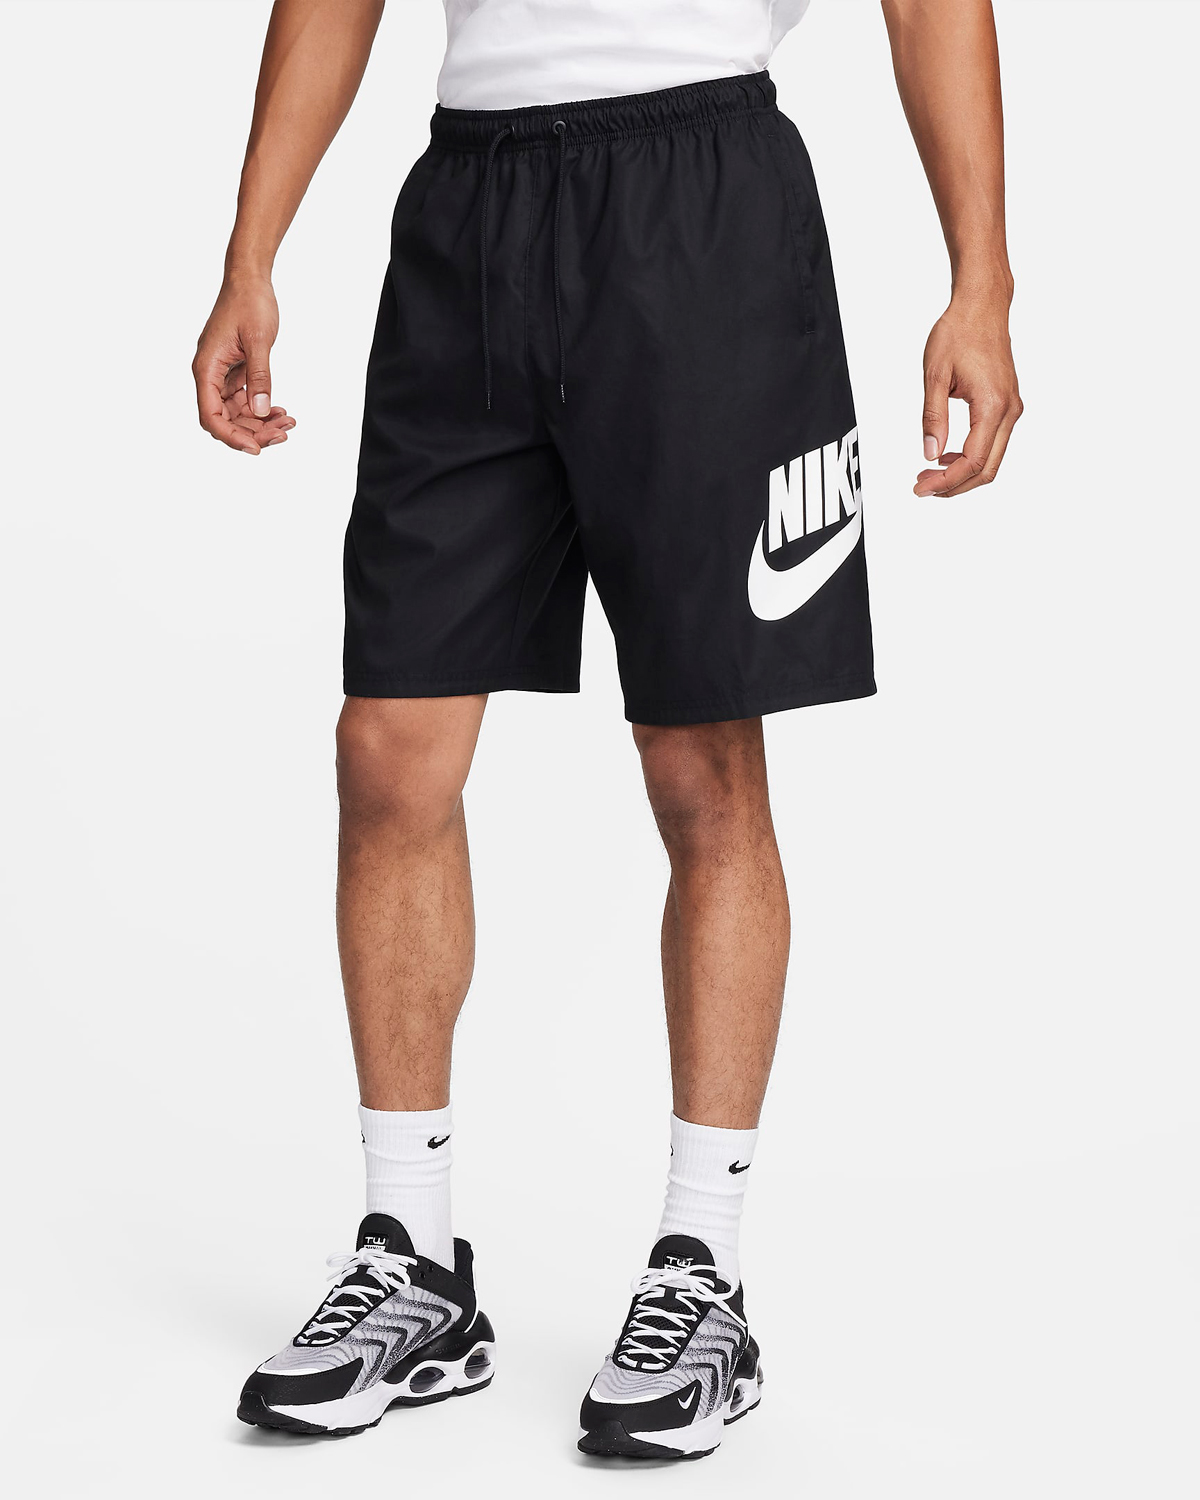 Nike-Club-Woven-Shorts-Black-White